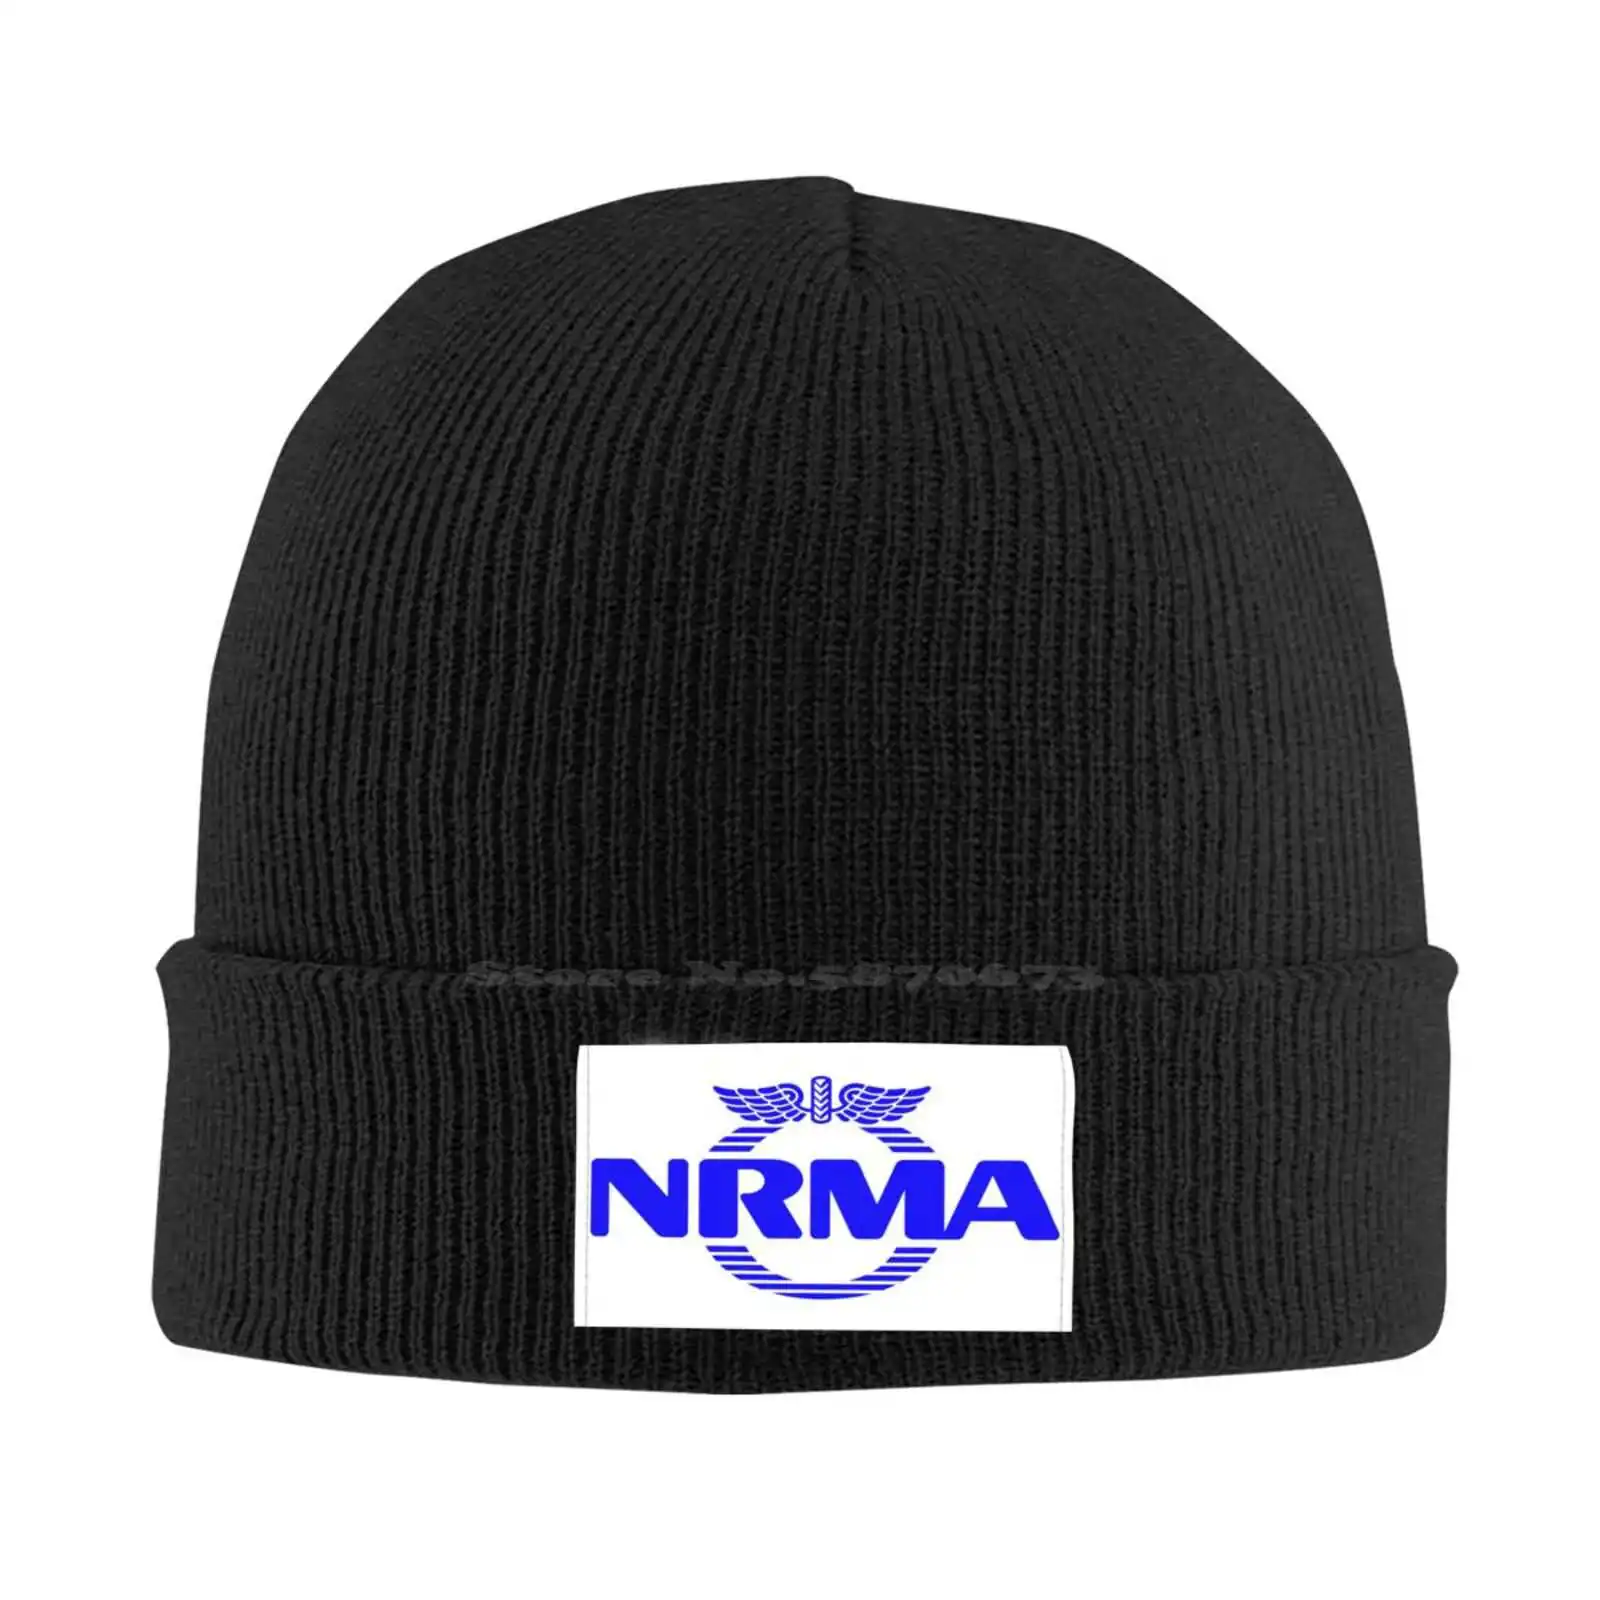 

Nrma Logo Fashion cap quality Baseball cap Knitted hat